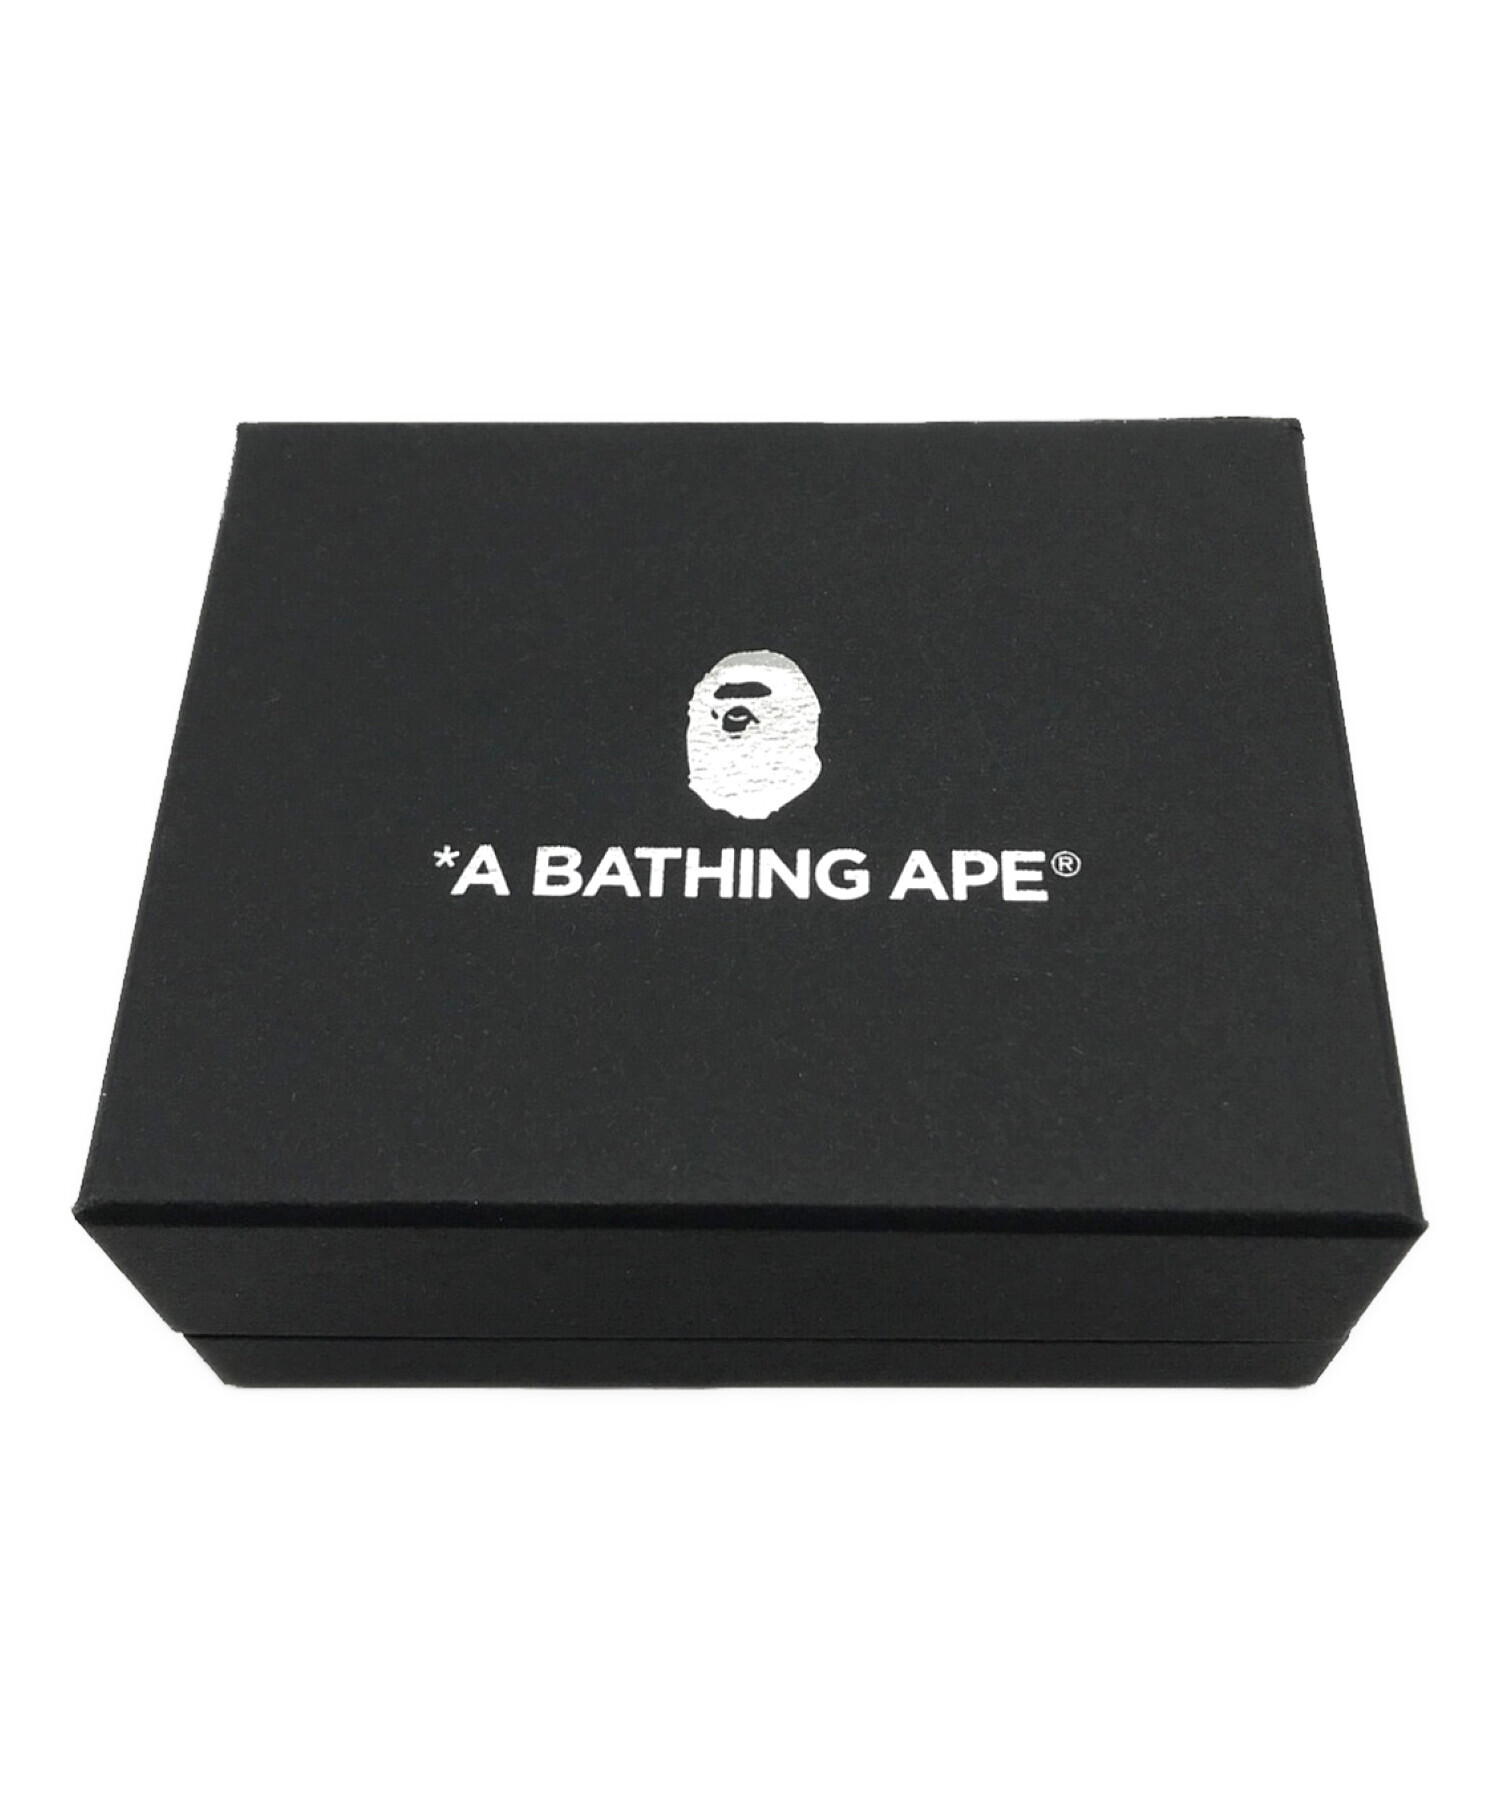 ABATHINGAPEA BATHING APE ネックレス BAPE BLACK